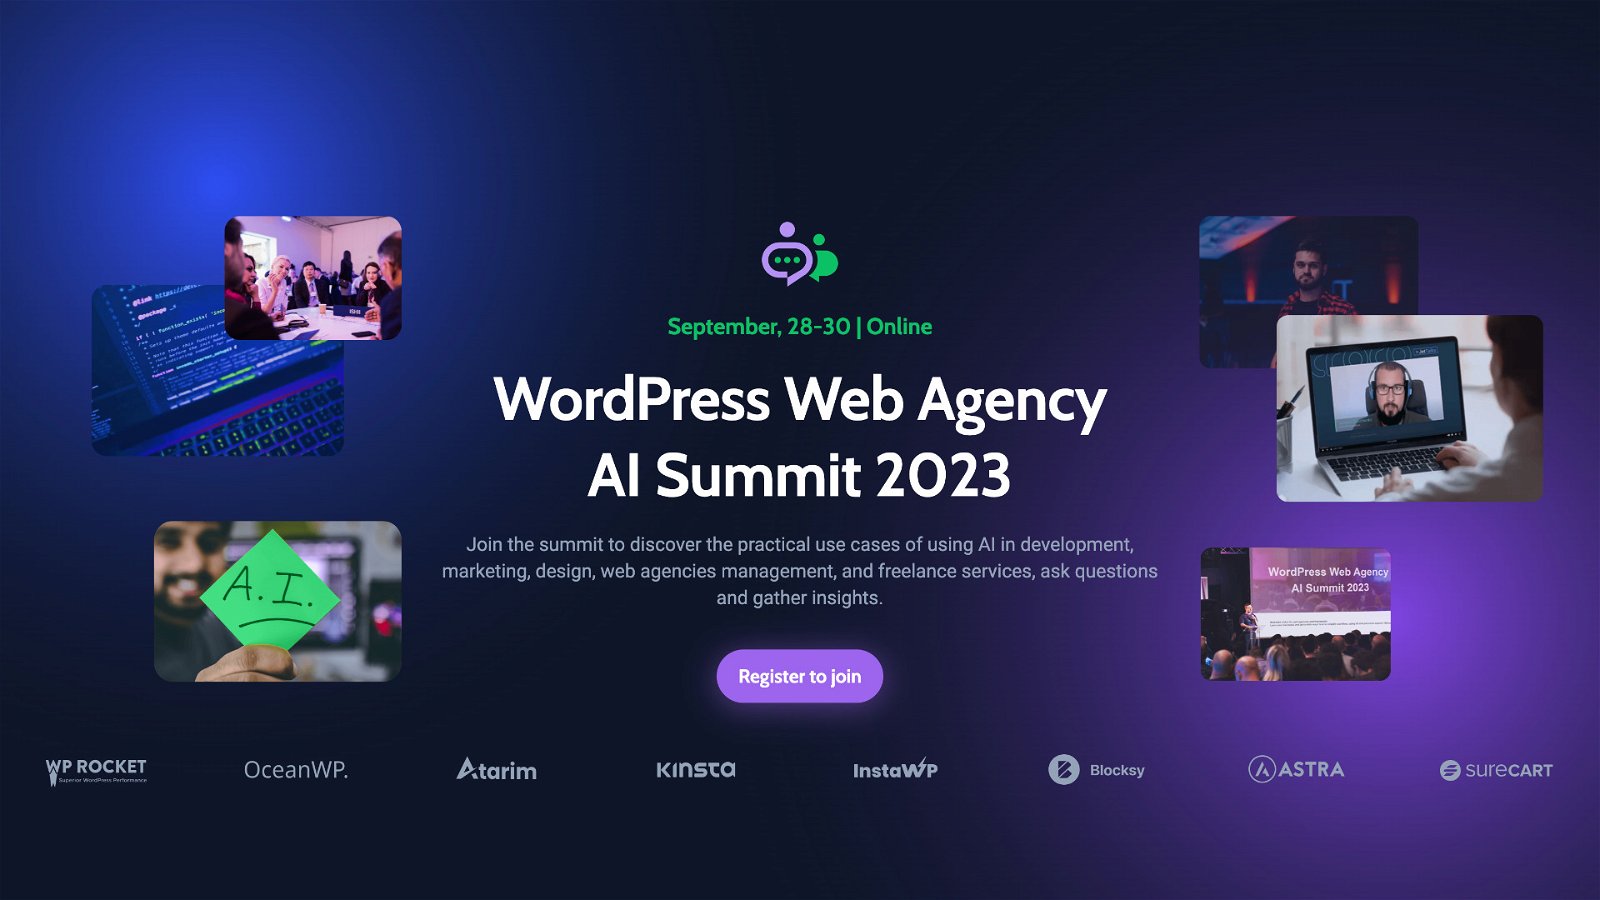 WordPress Web Agency AI Summit 2023